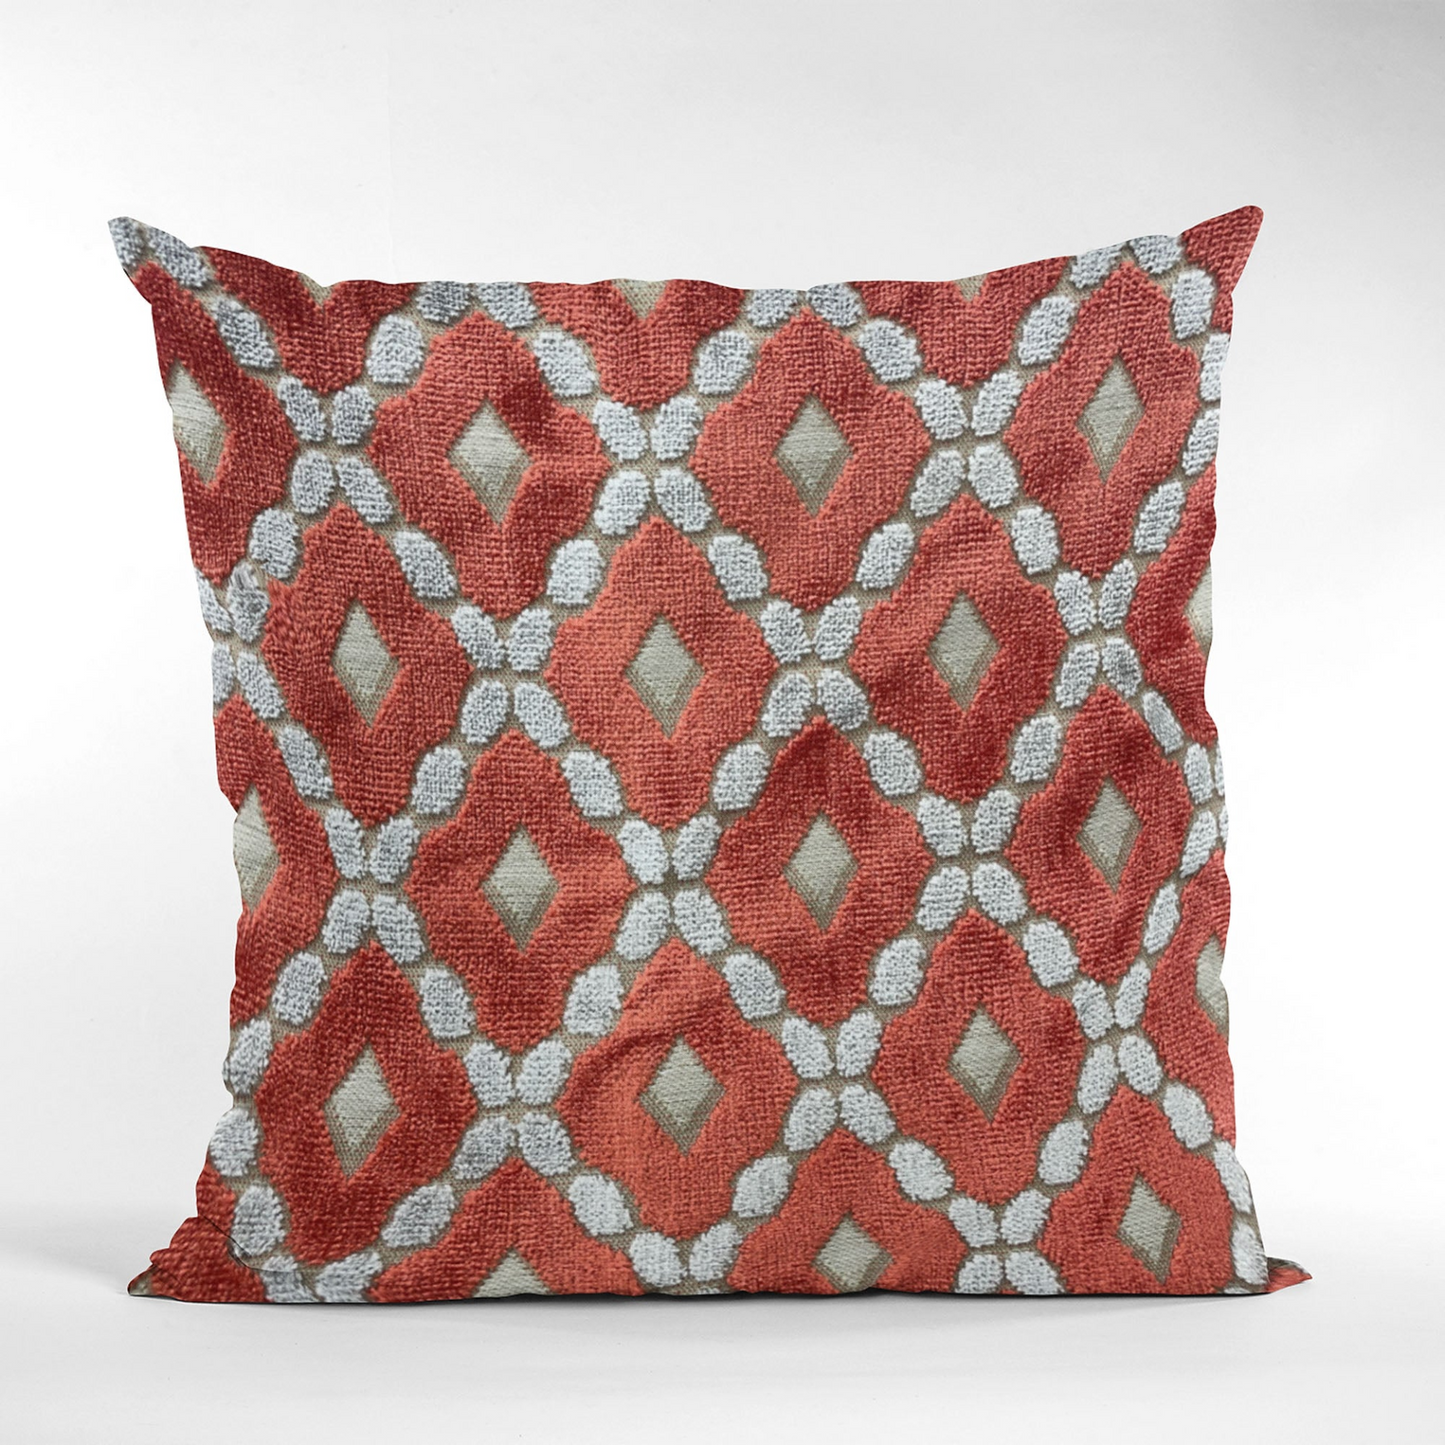 Plutus Velvet Majestic Red, Gray Handmade Luxury Pillow - Double Sided, Invisible Zipper, Hypoallergenic Insert